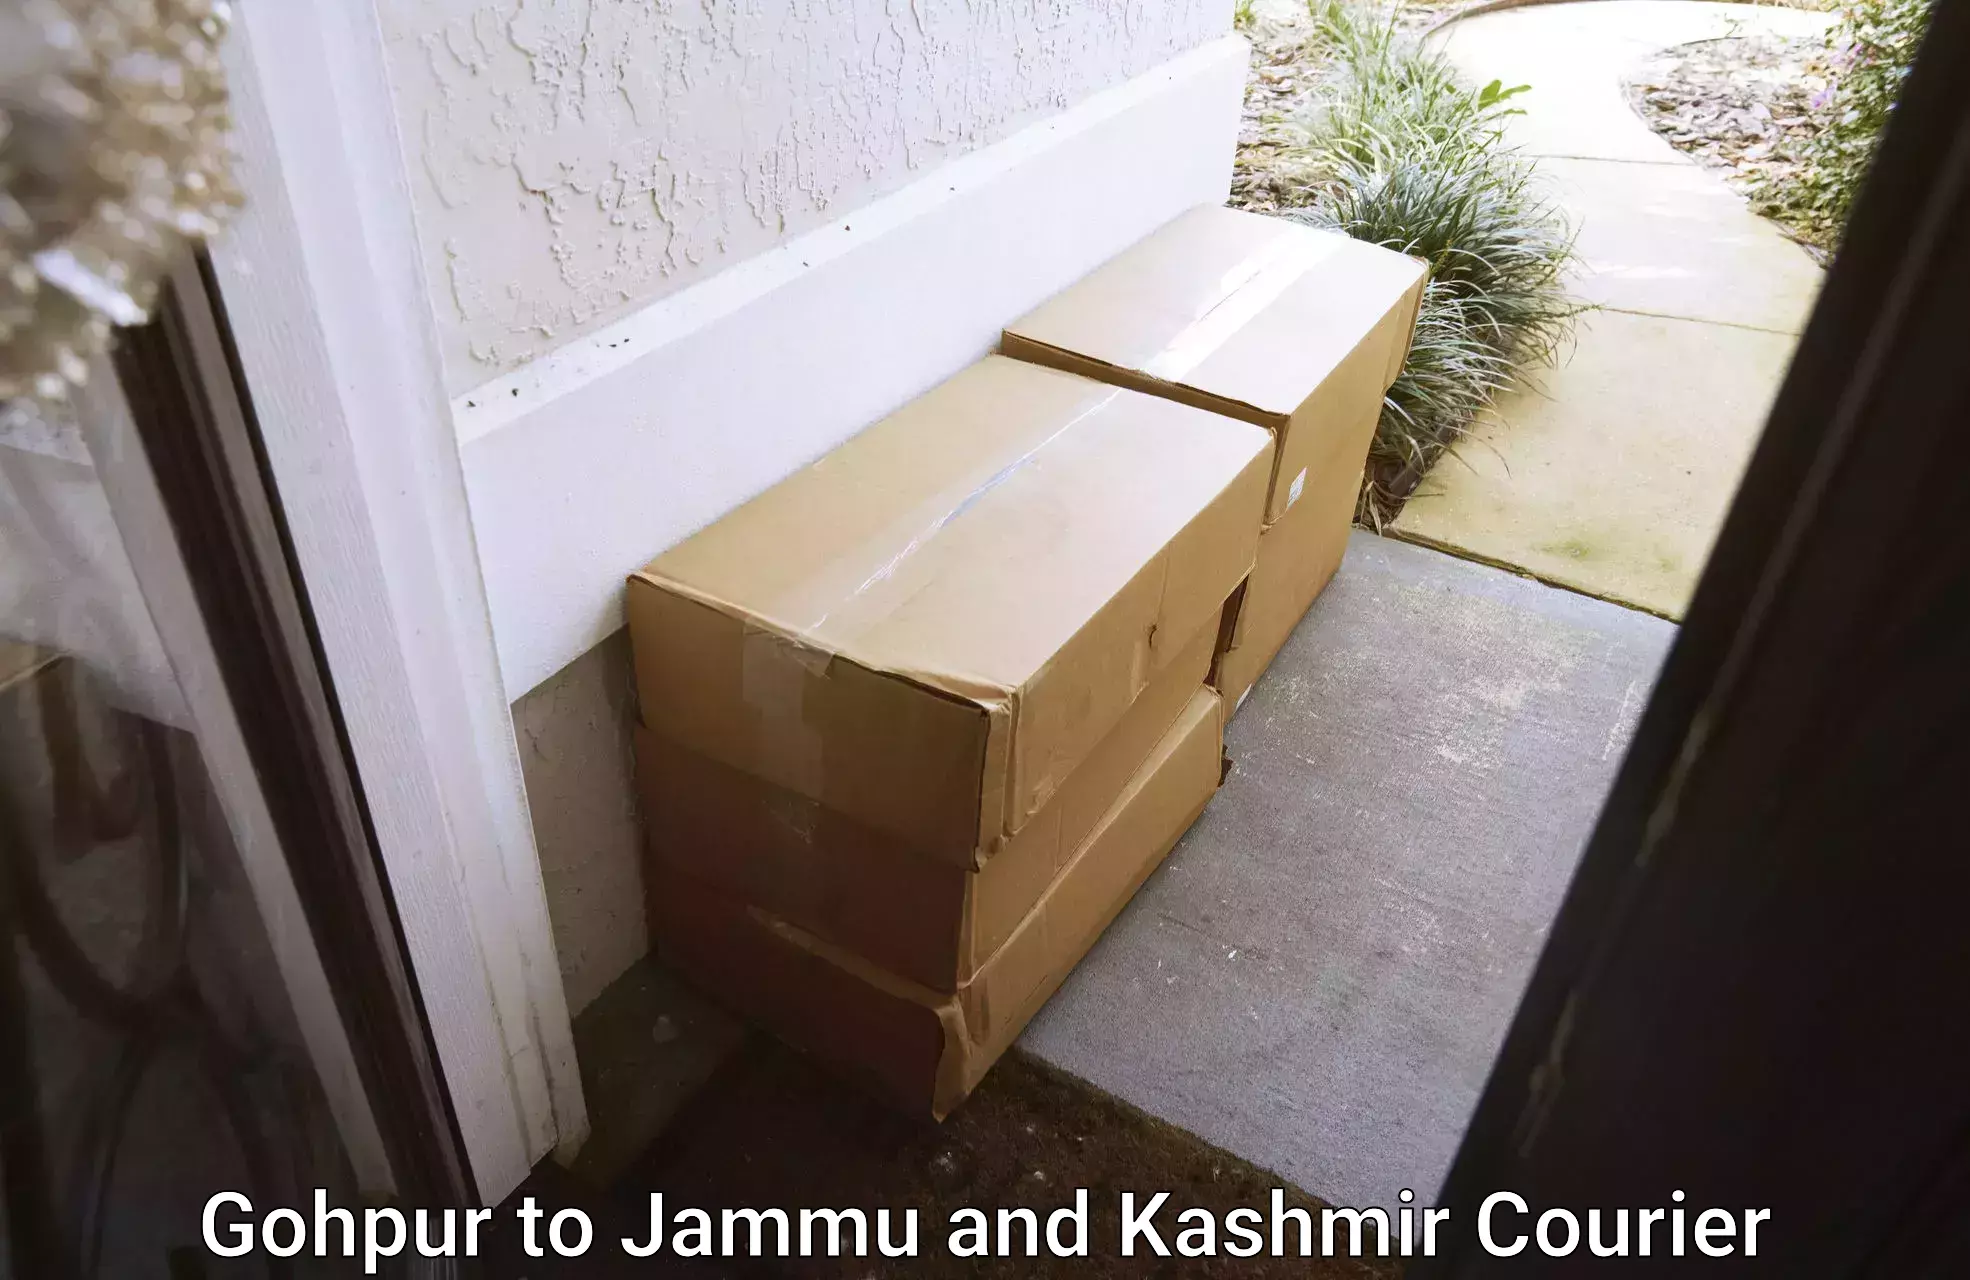 Seamless shipping experience Gohpur to Kargil